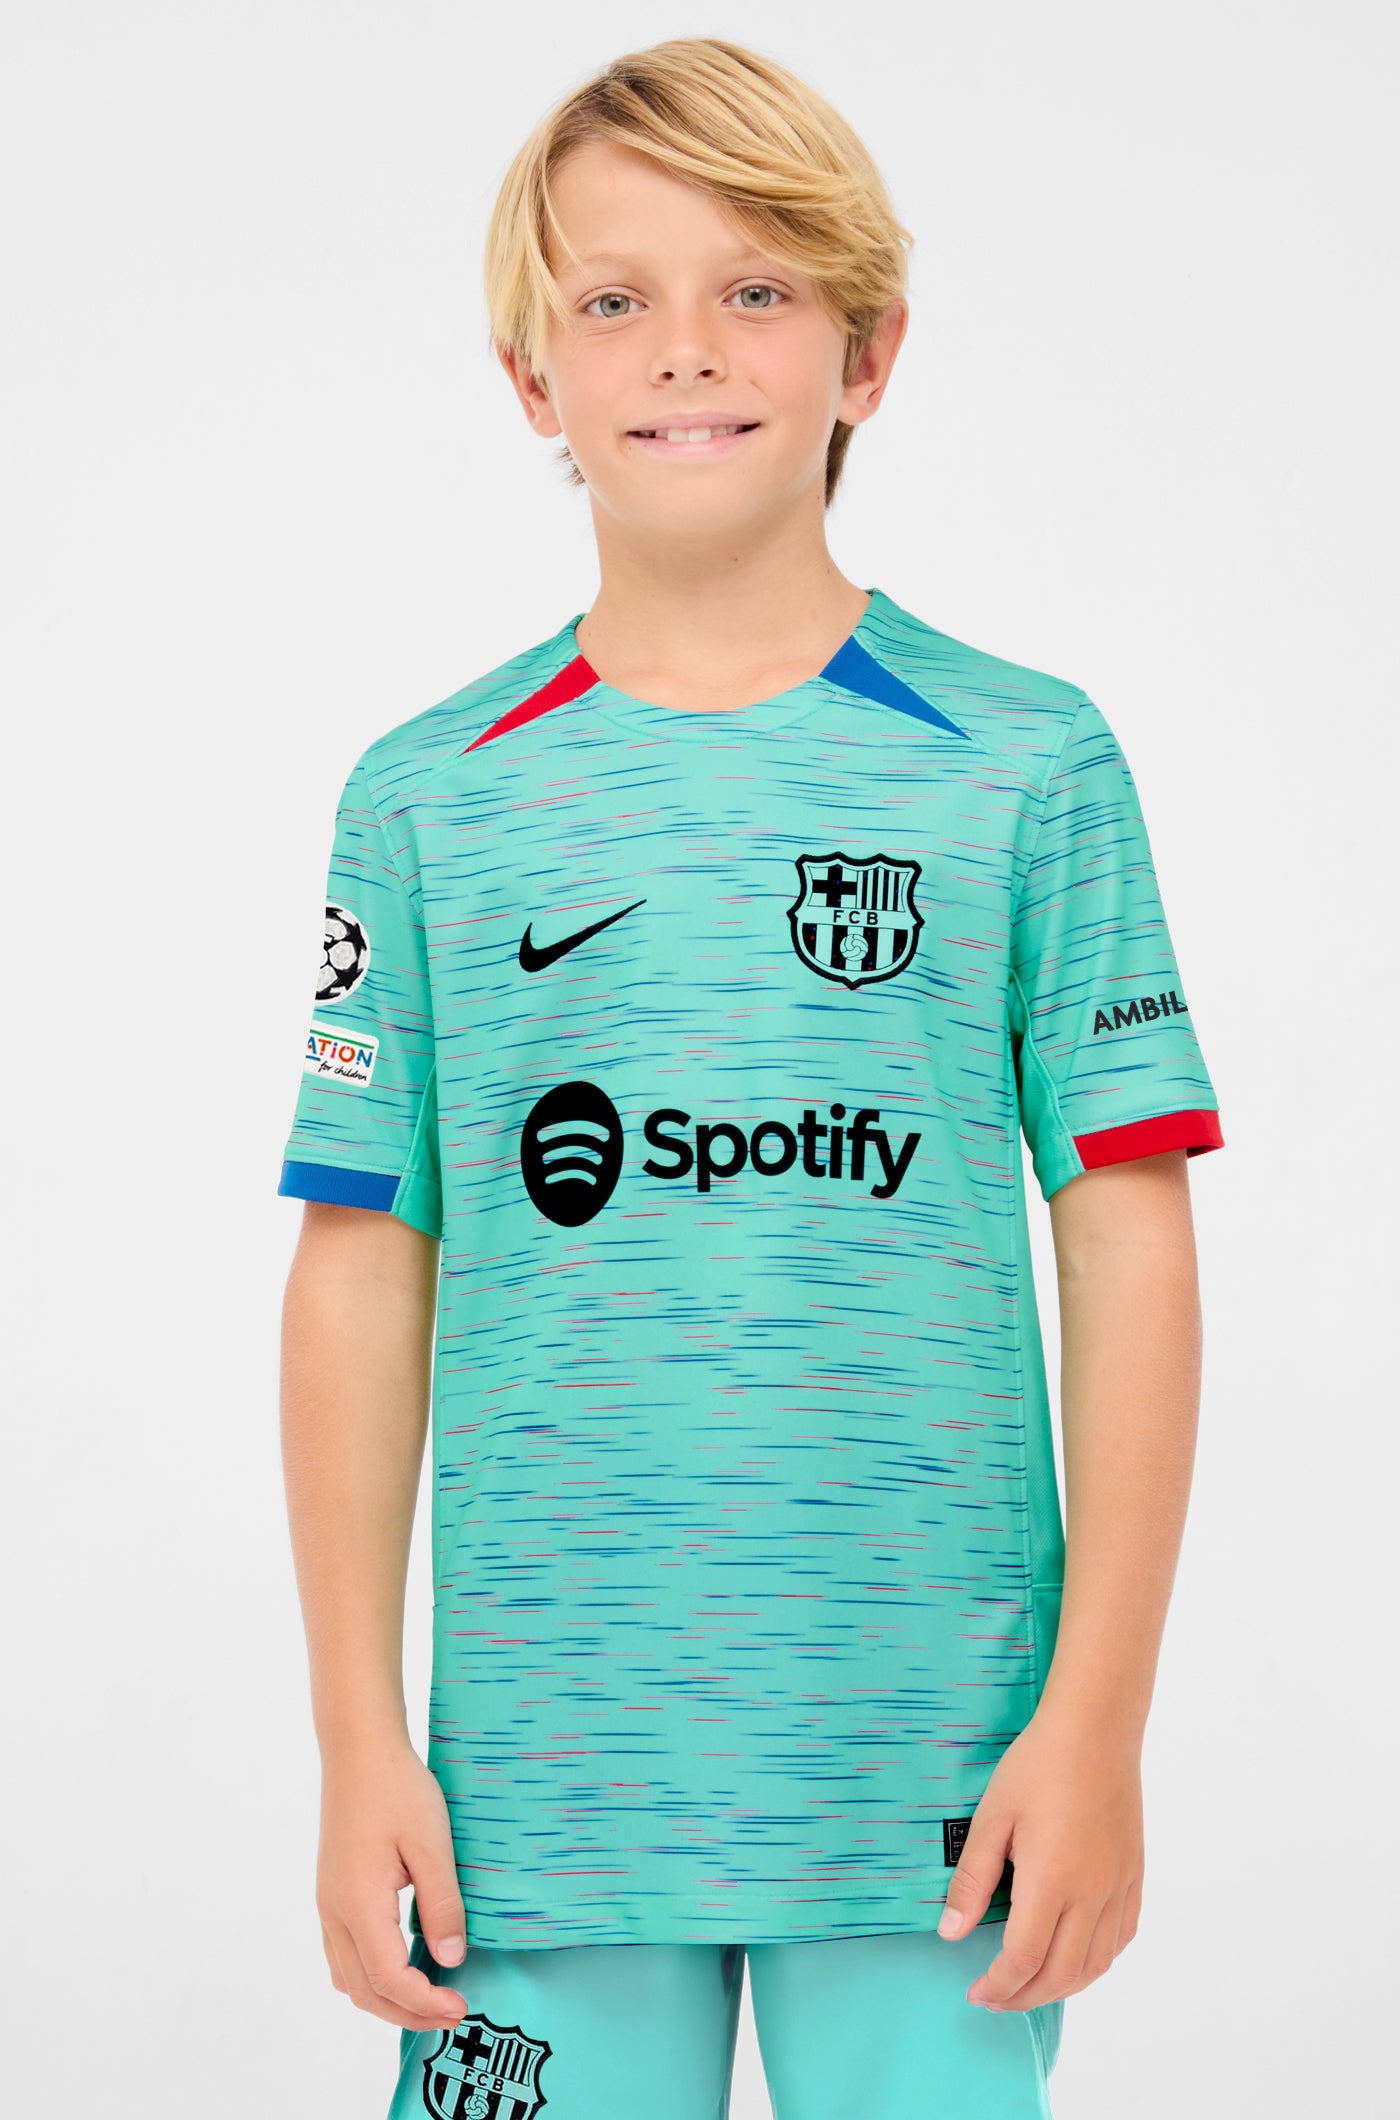 UCL FC Barcelona third shirt 23/24 - Junior - R. ARAUJO